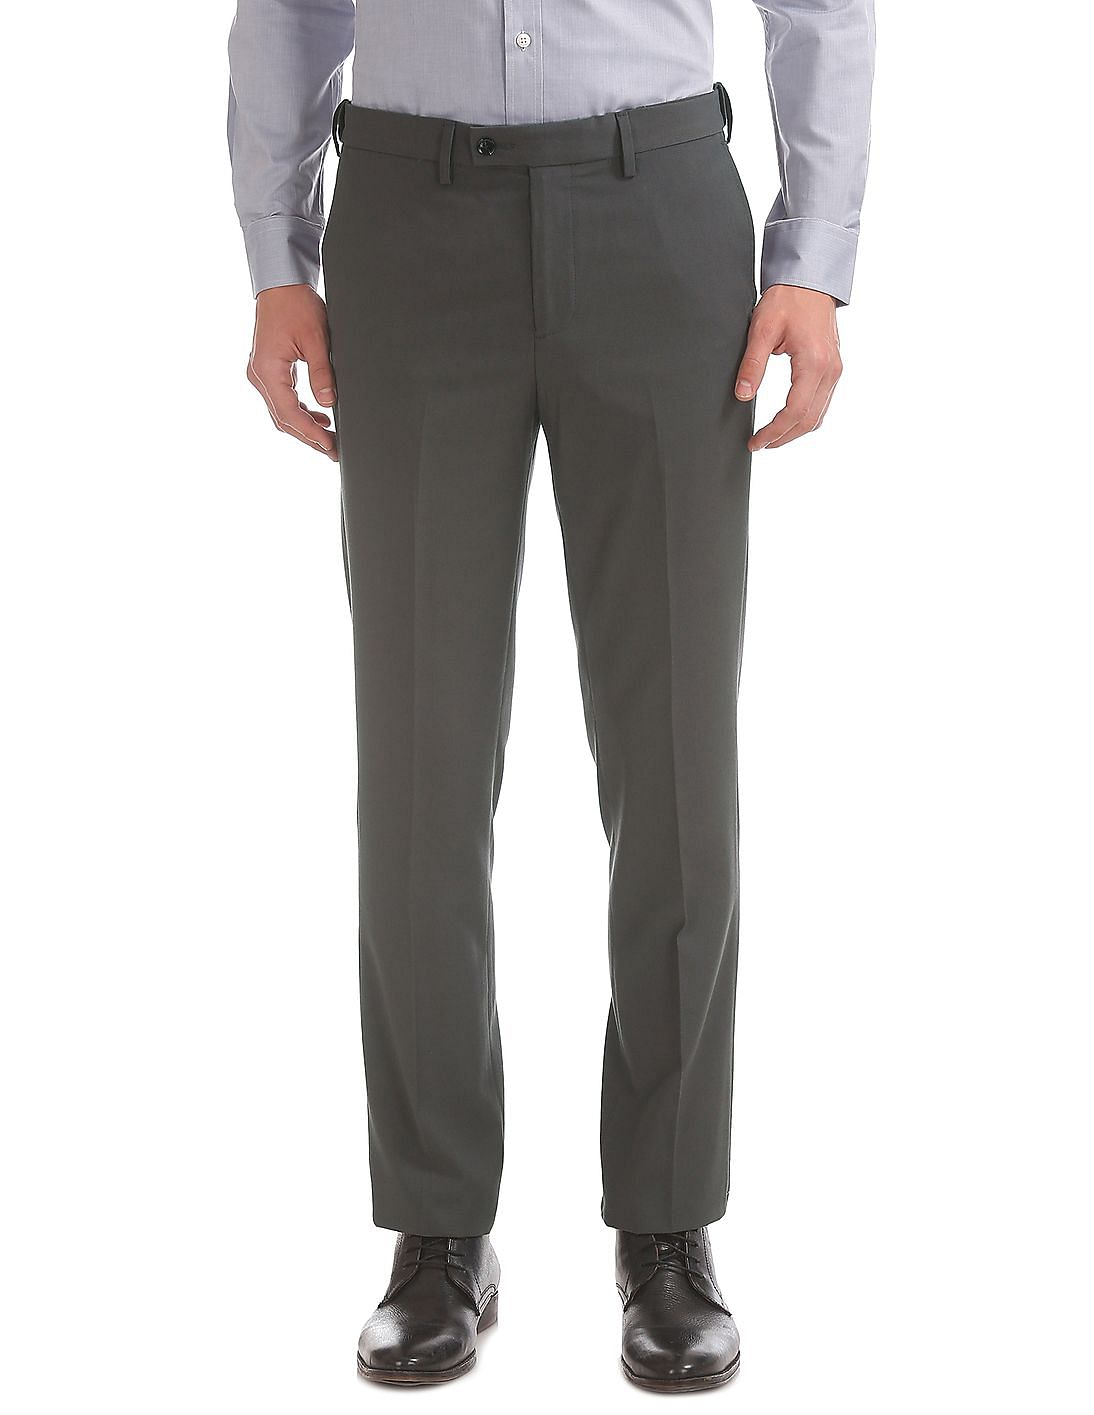 Buy Arrow Autoflex Waist Tapered Fit Trousers - NNNOW.com